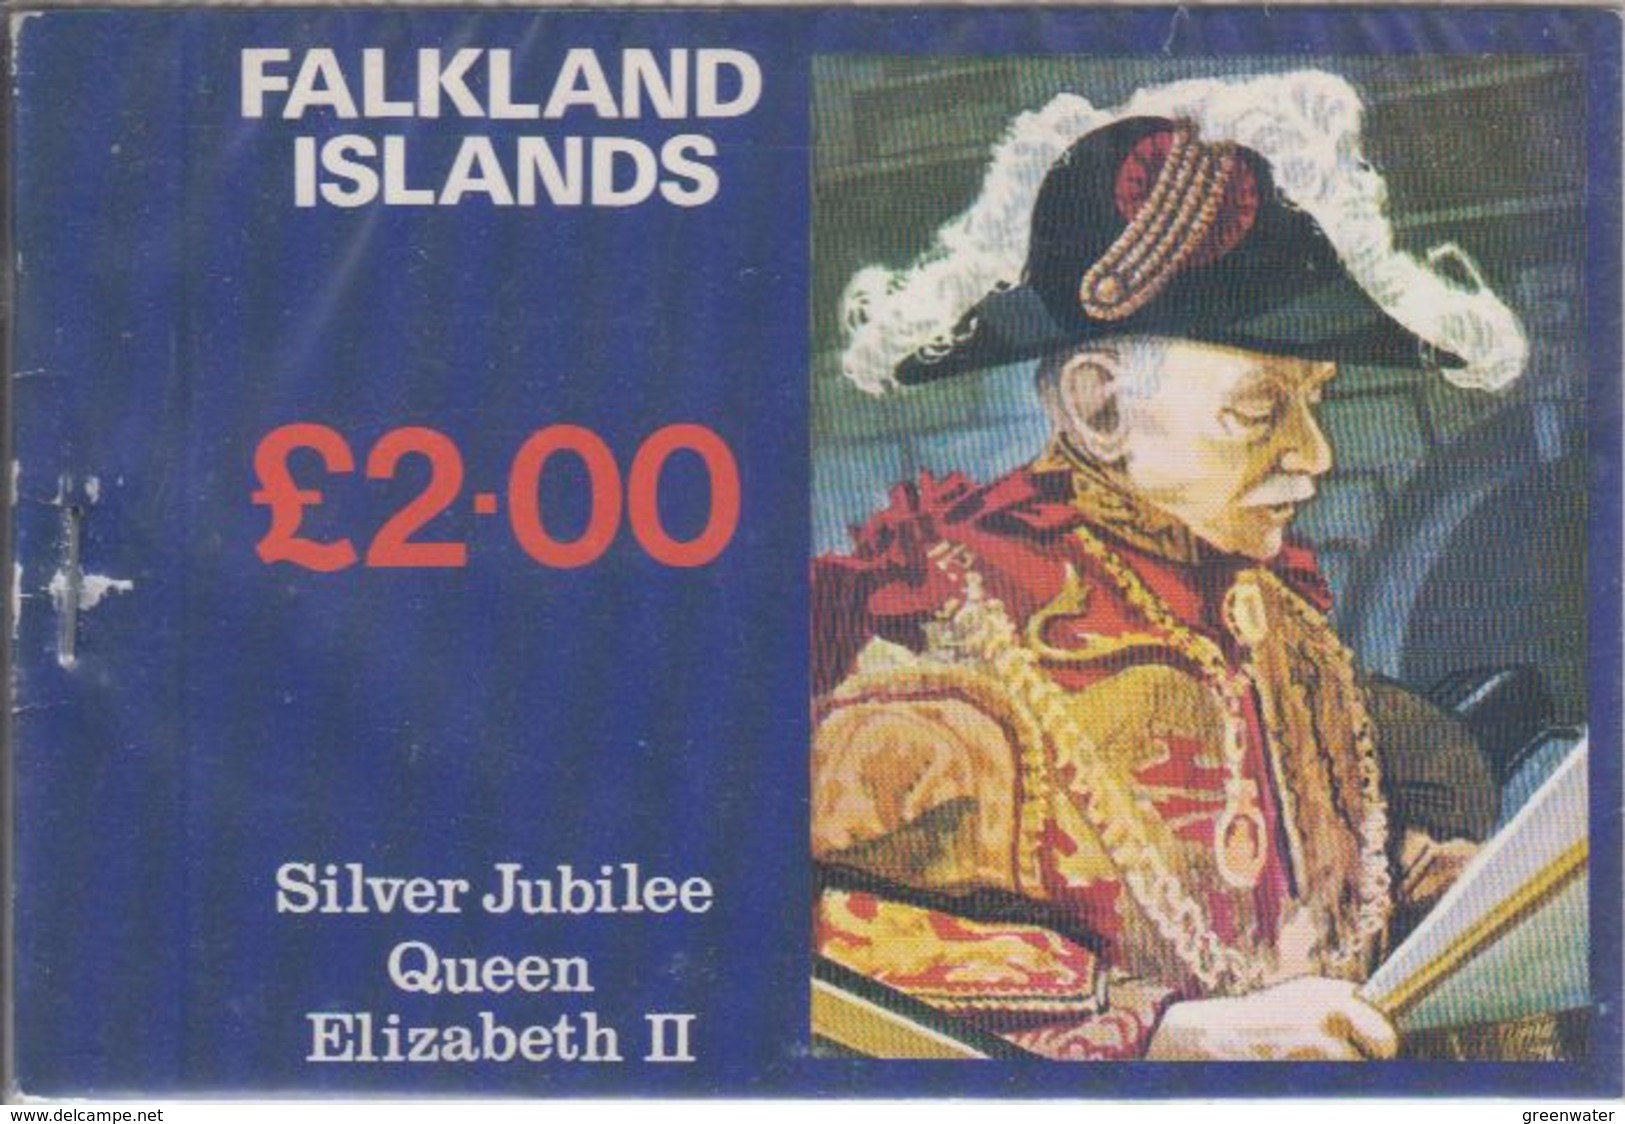 Falkland Islands 1977 Silver Jubilee Booklet ** Mnh (40557) - Falkland